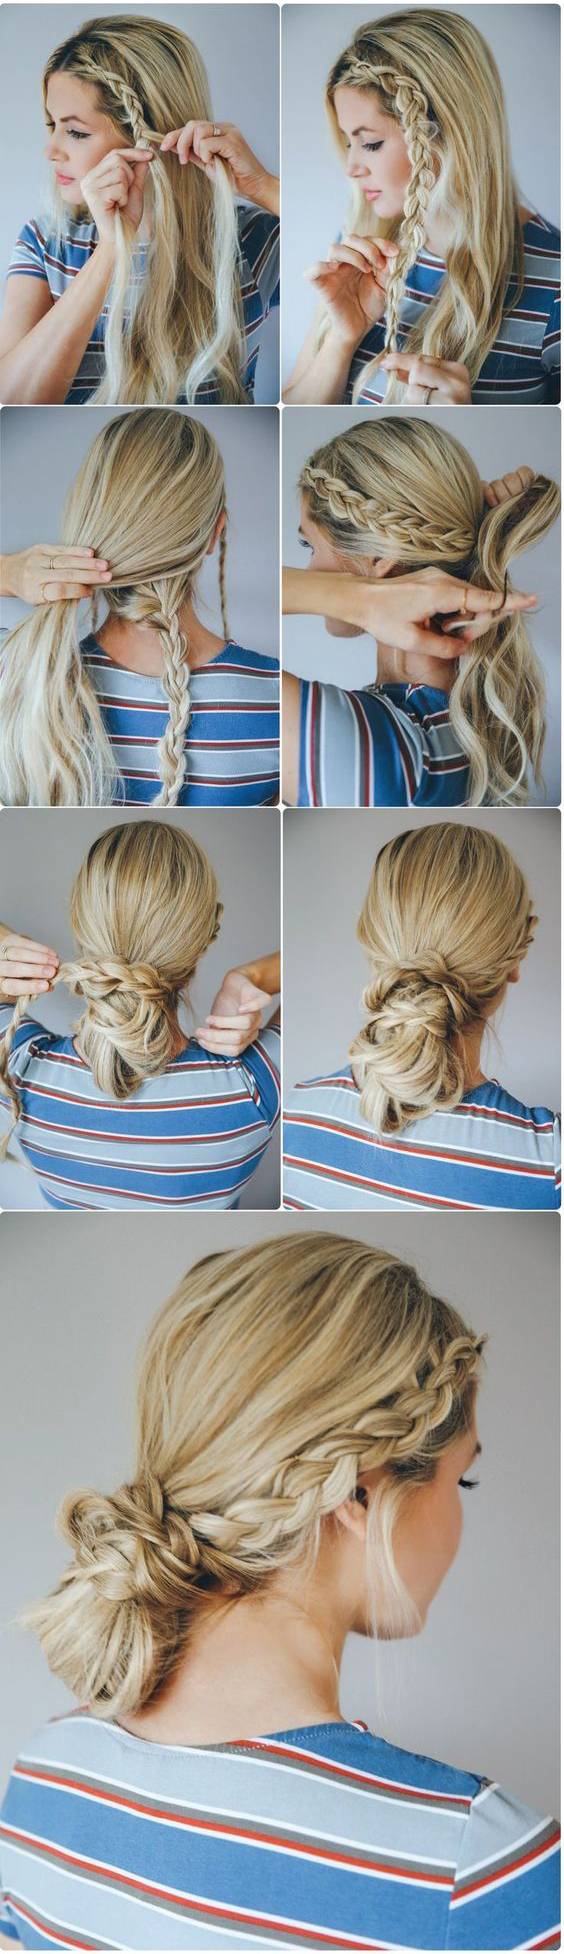 JamAdvice_com_ua_hairstyles-with-braids-for-long-hair-14